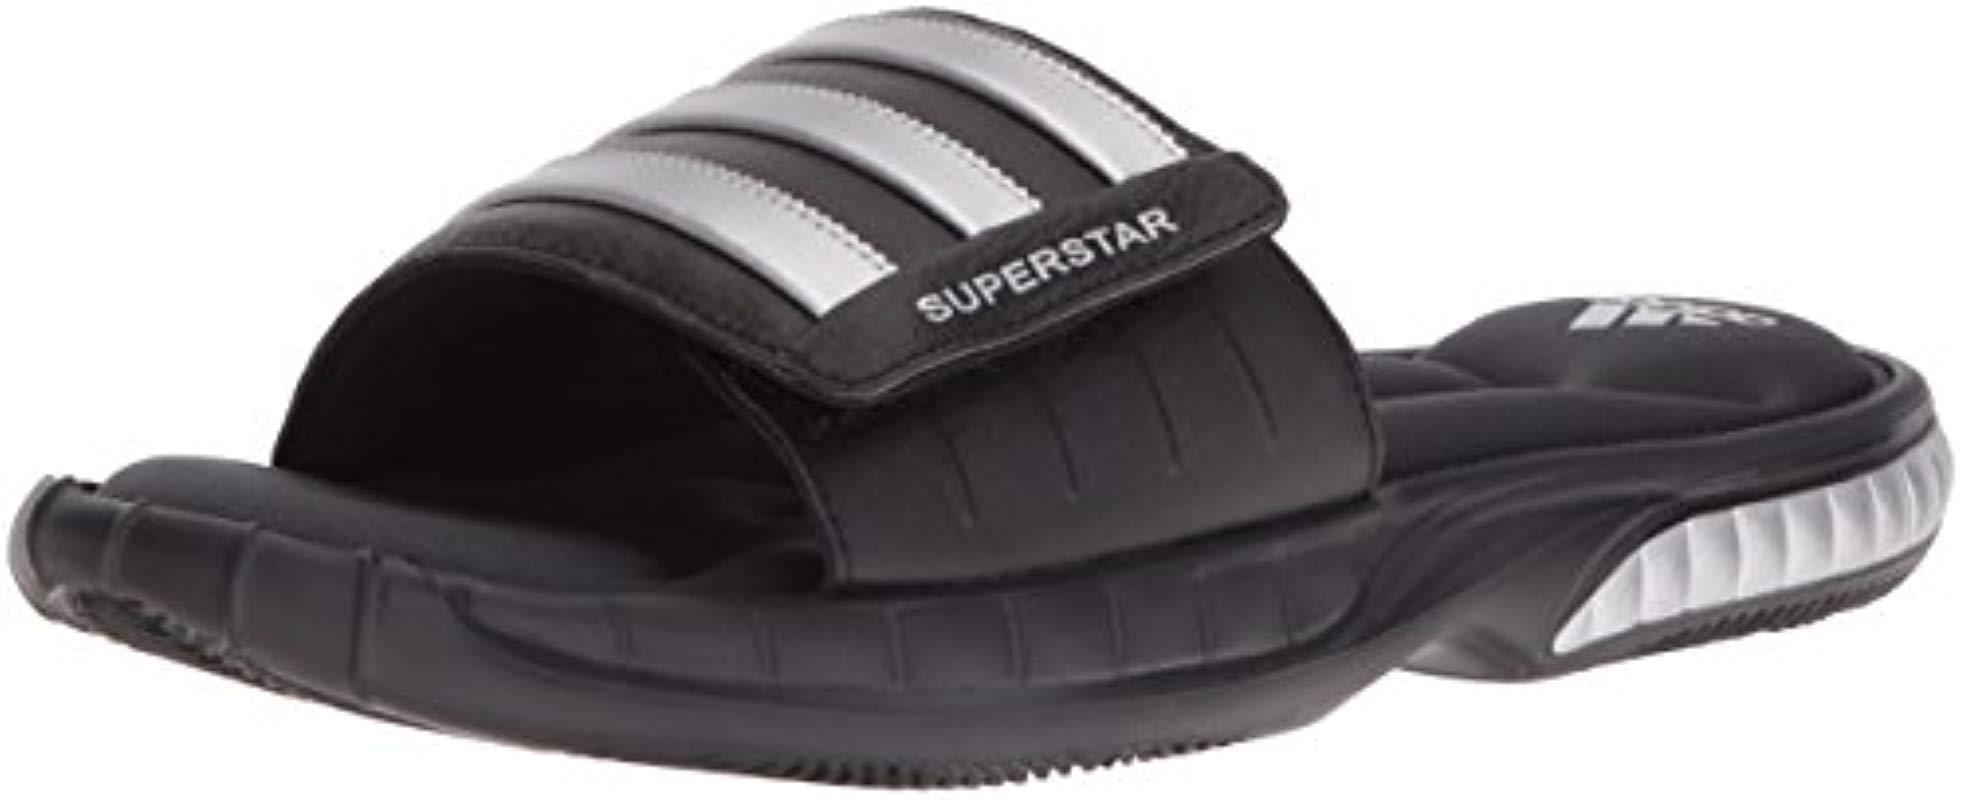 adidas Synthetic Performance Superstar 3g Slide Sandal in Black/Silver/Grey  (Black) for Men | Lyst